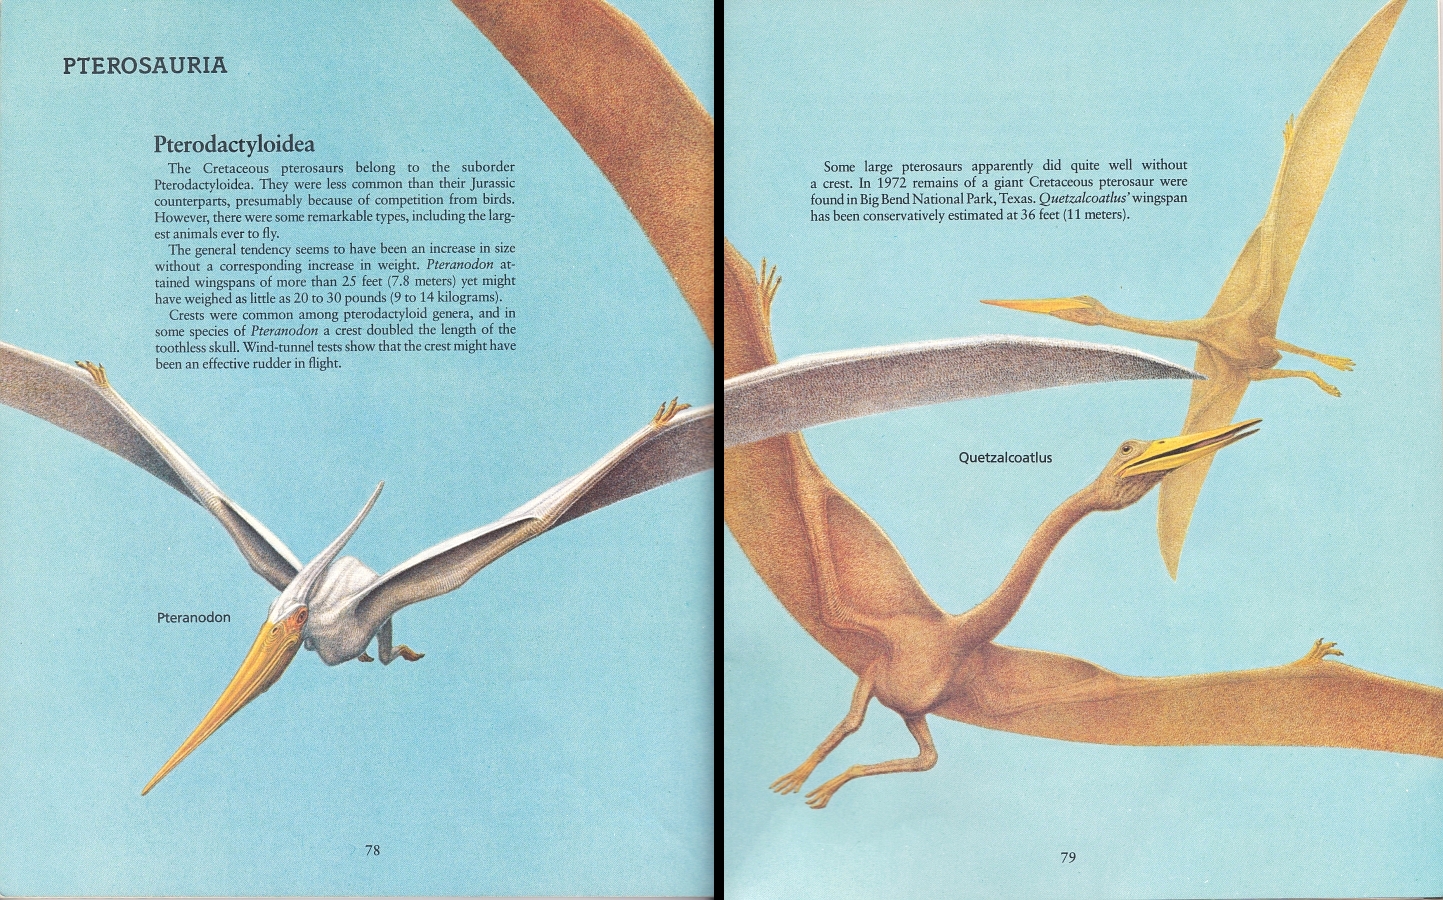 Pteranodon and Quetzalcoatlus by Peter Zallinger